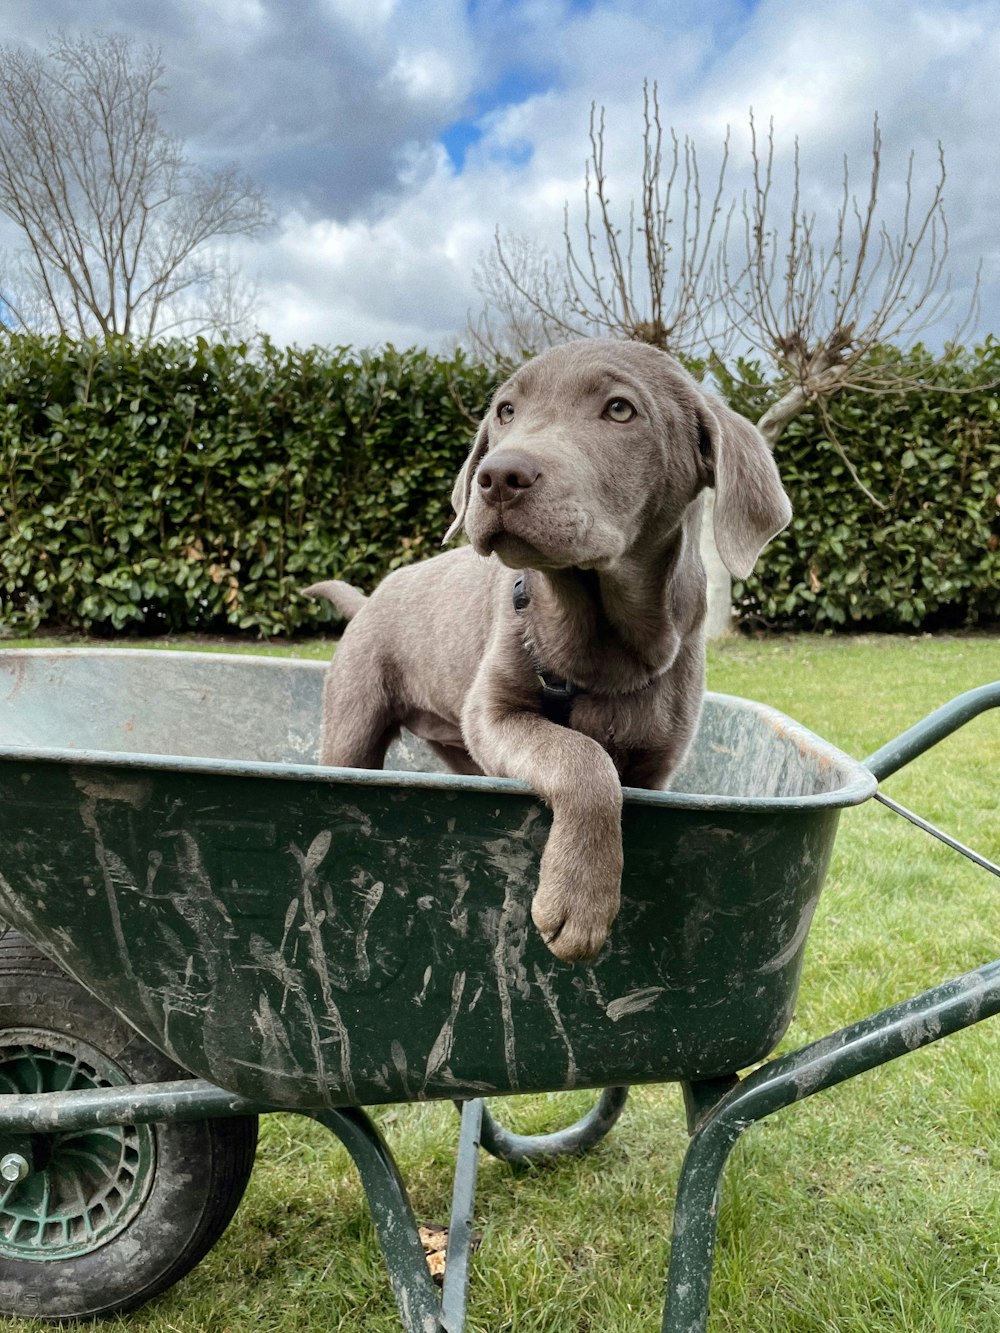 a dog sitting in a wheelbarrow in the grass